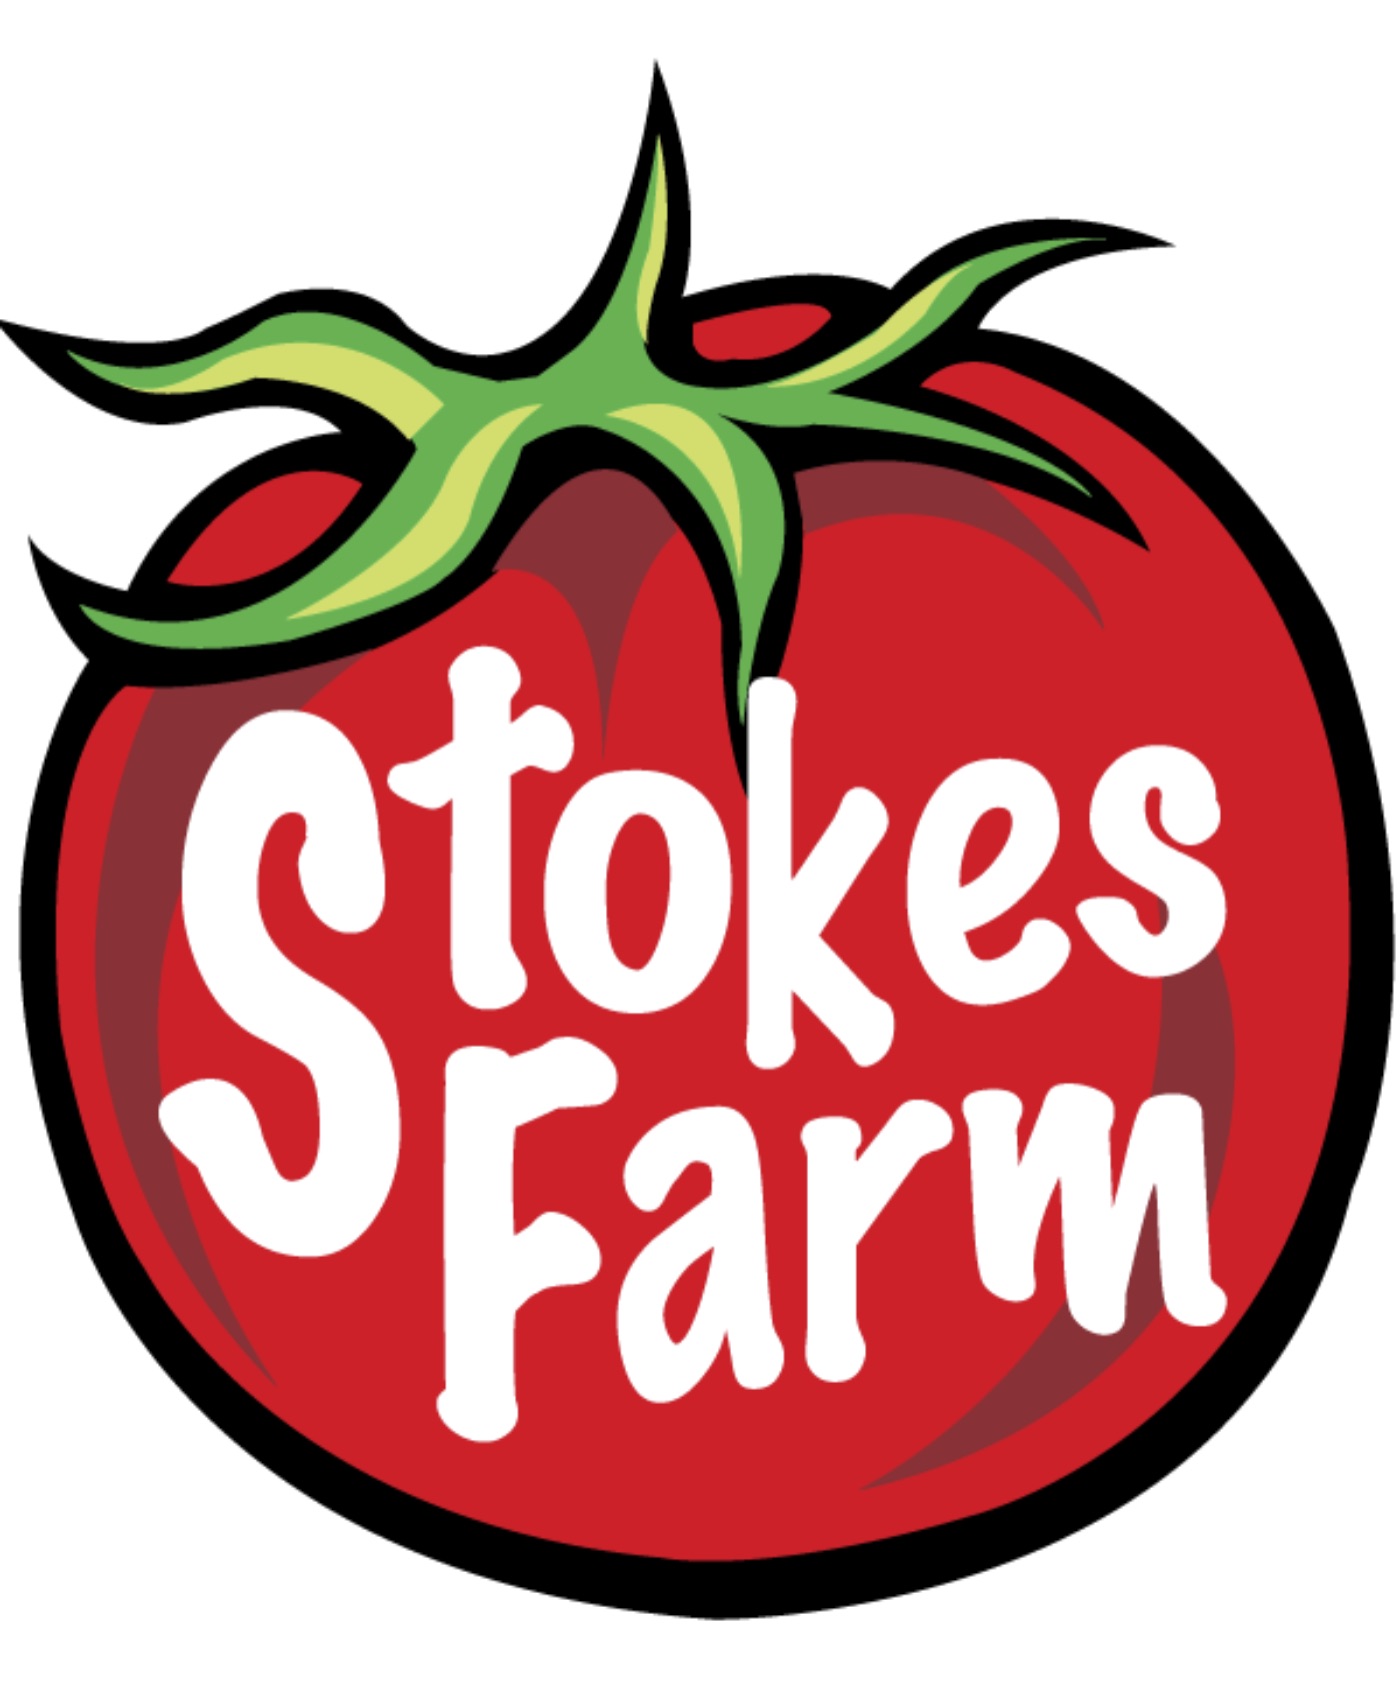 Stokes Farm Inc